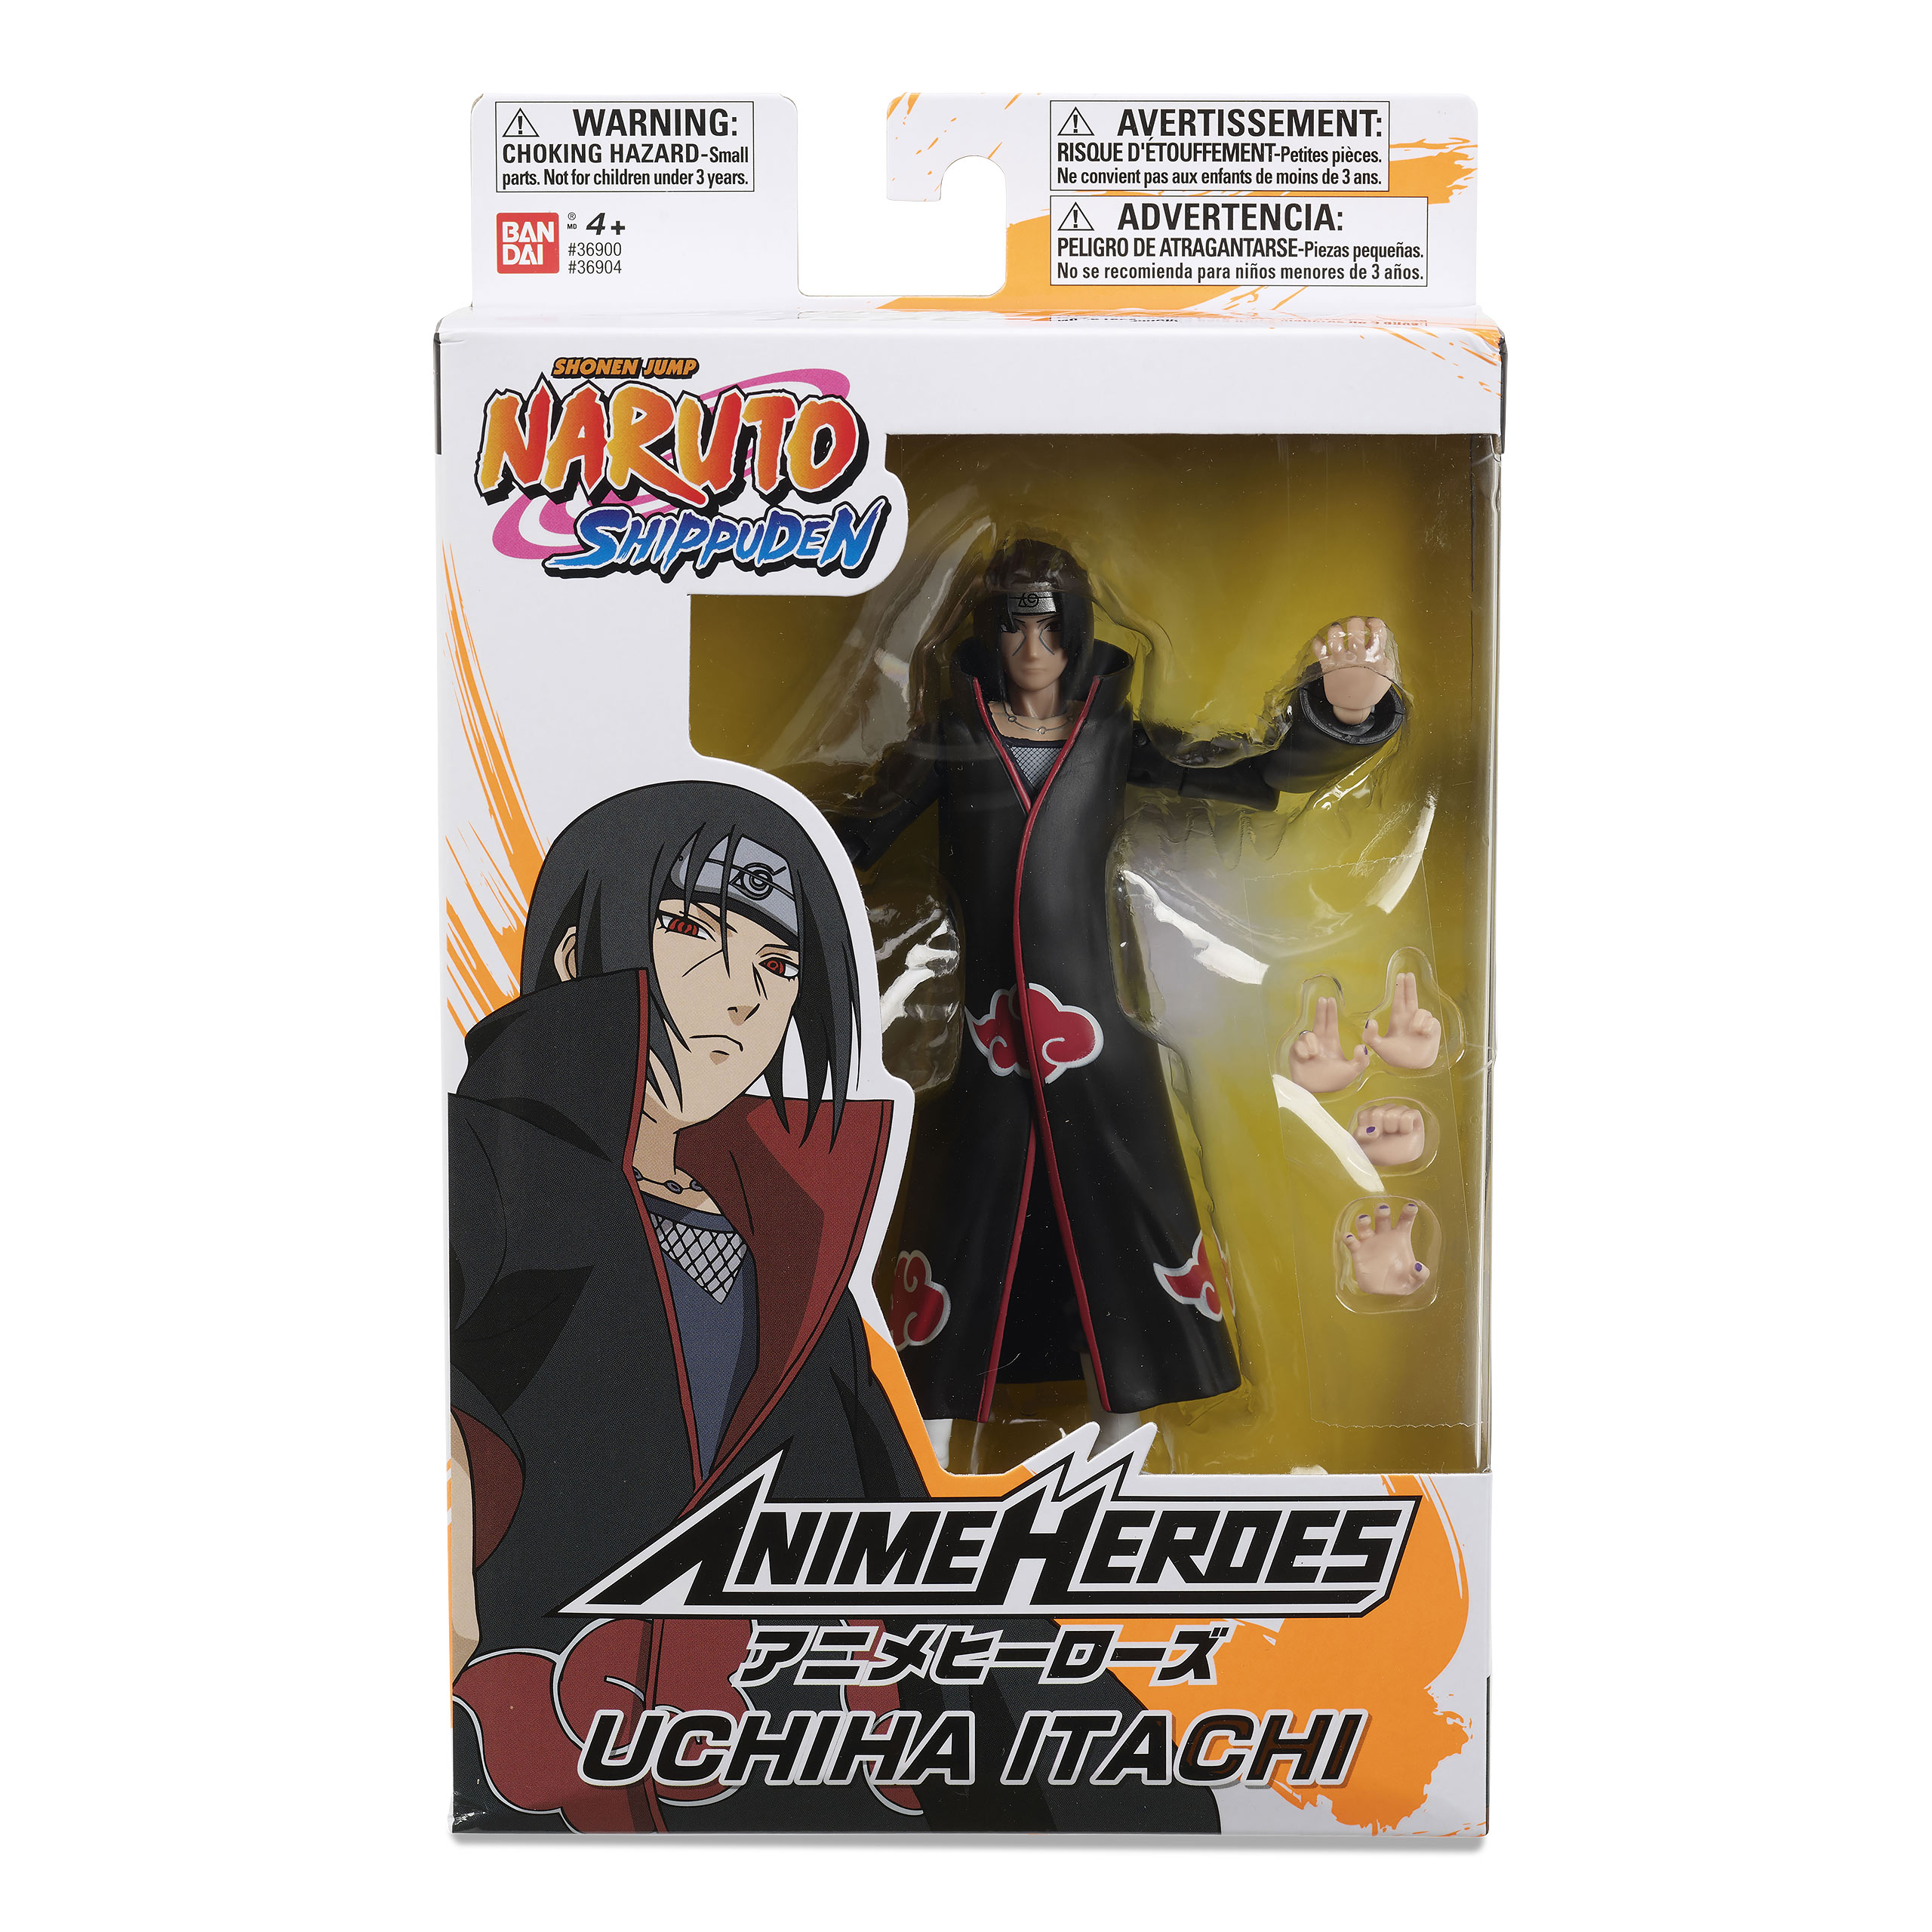 Naruto Shippuden - Uchiha Itachi Anime Heroes Actionfigur